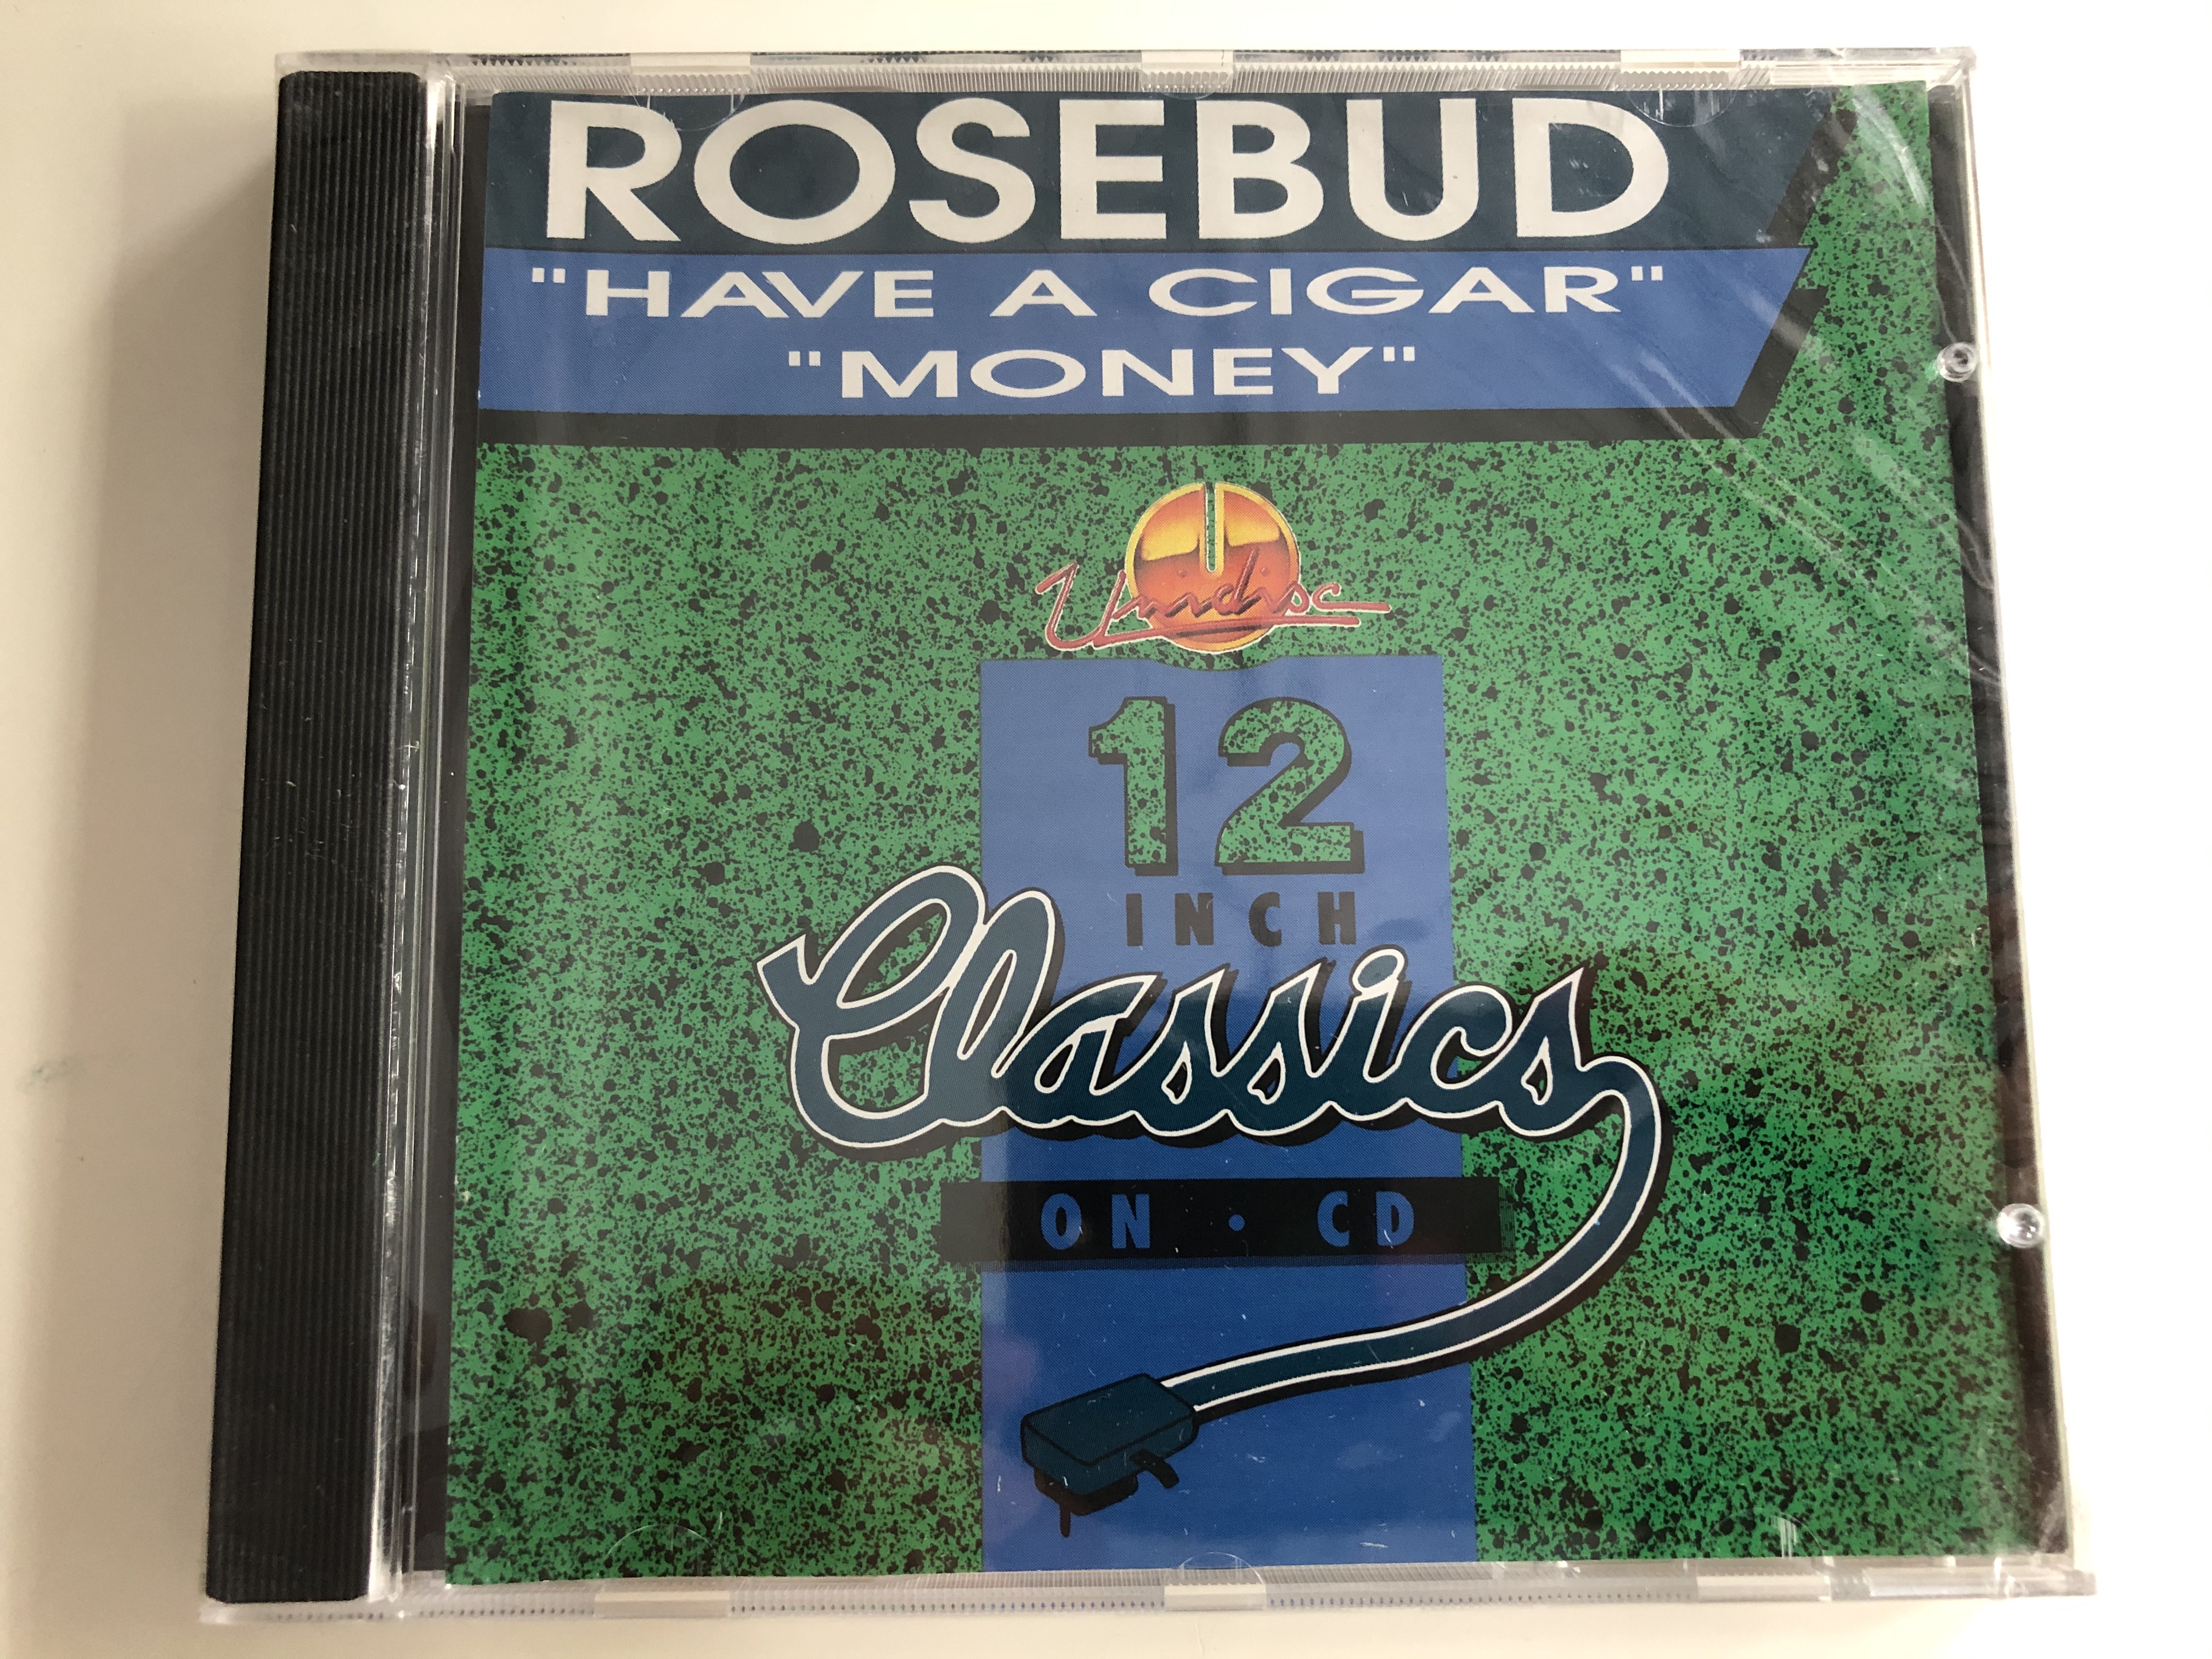 rosebud-have-a-cigar-money-12-inch-classics-on-cd-unidisc-audio-cd-sp5-1451-1-.jpg